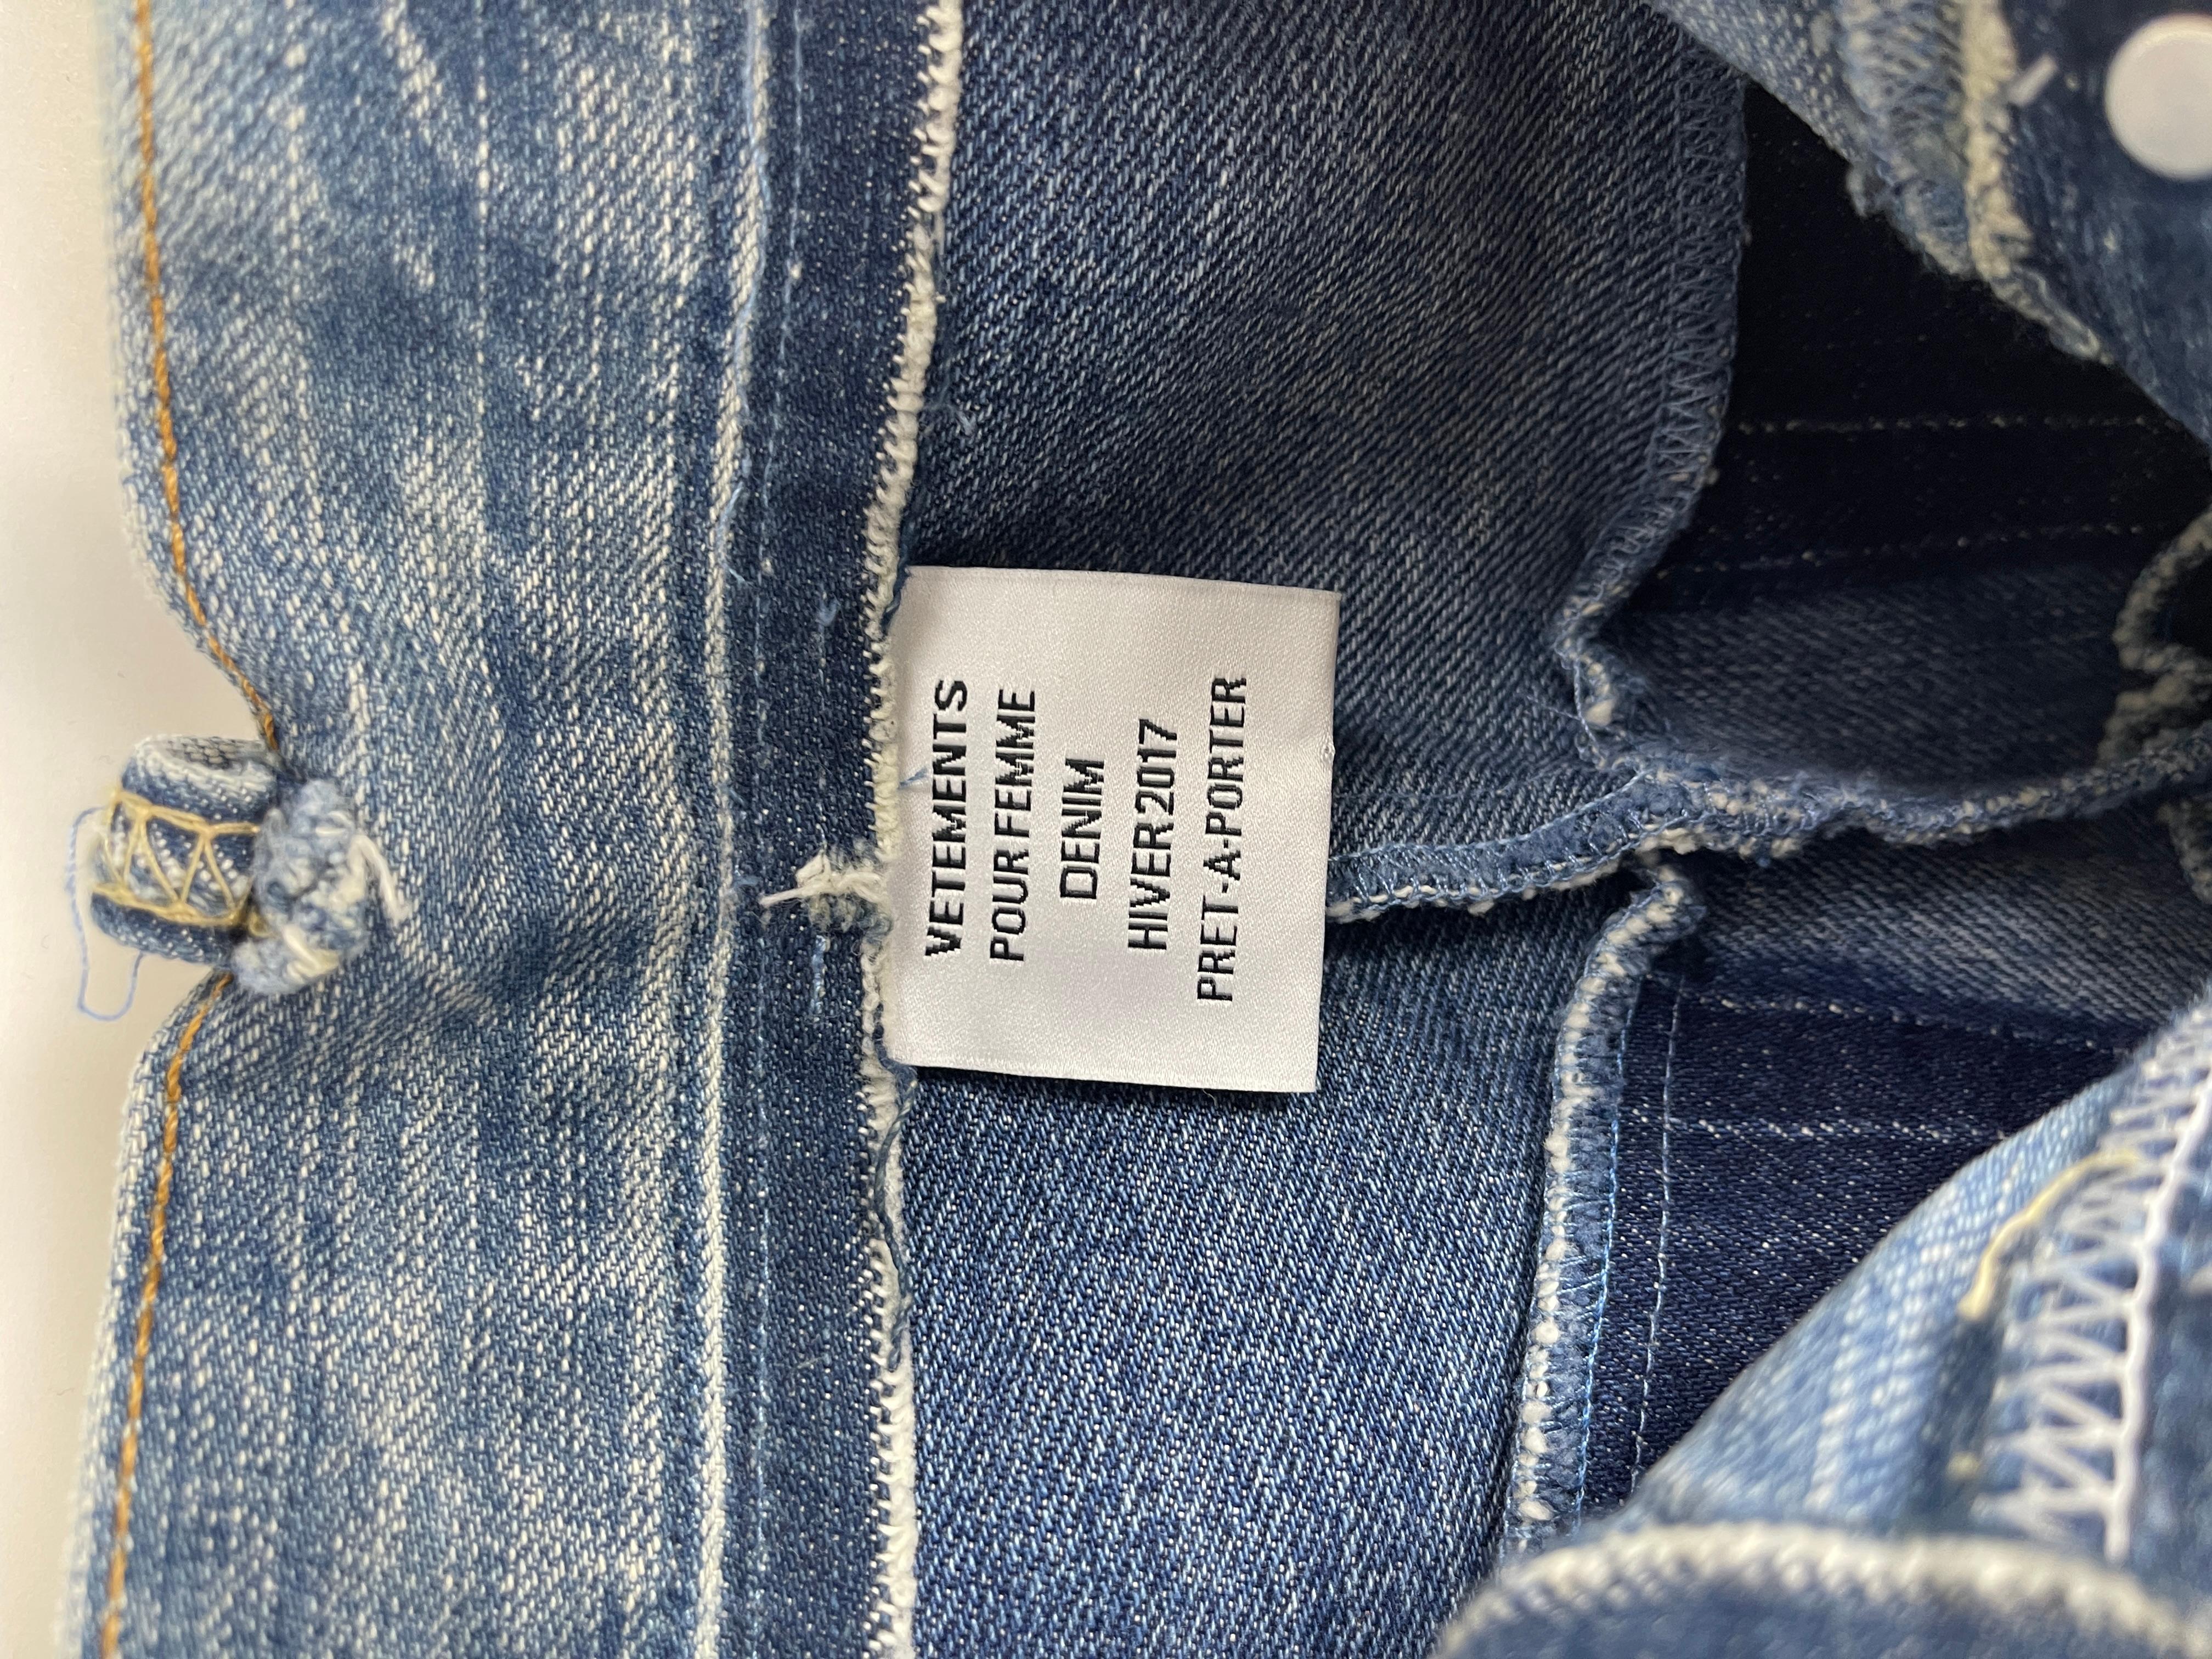 Vetements x Levi's 2017 Bearbeitete Jeans im Angebot 1